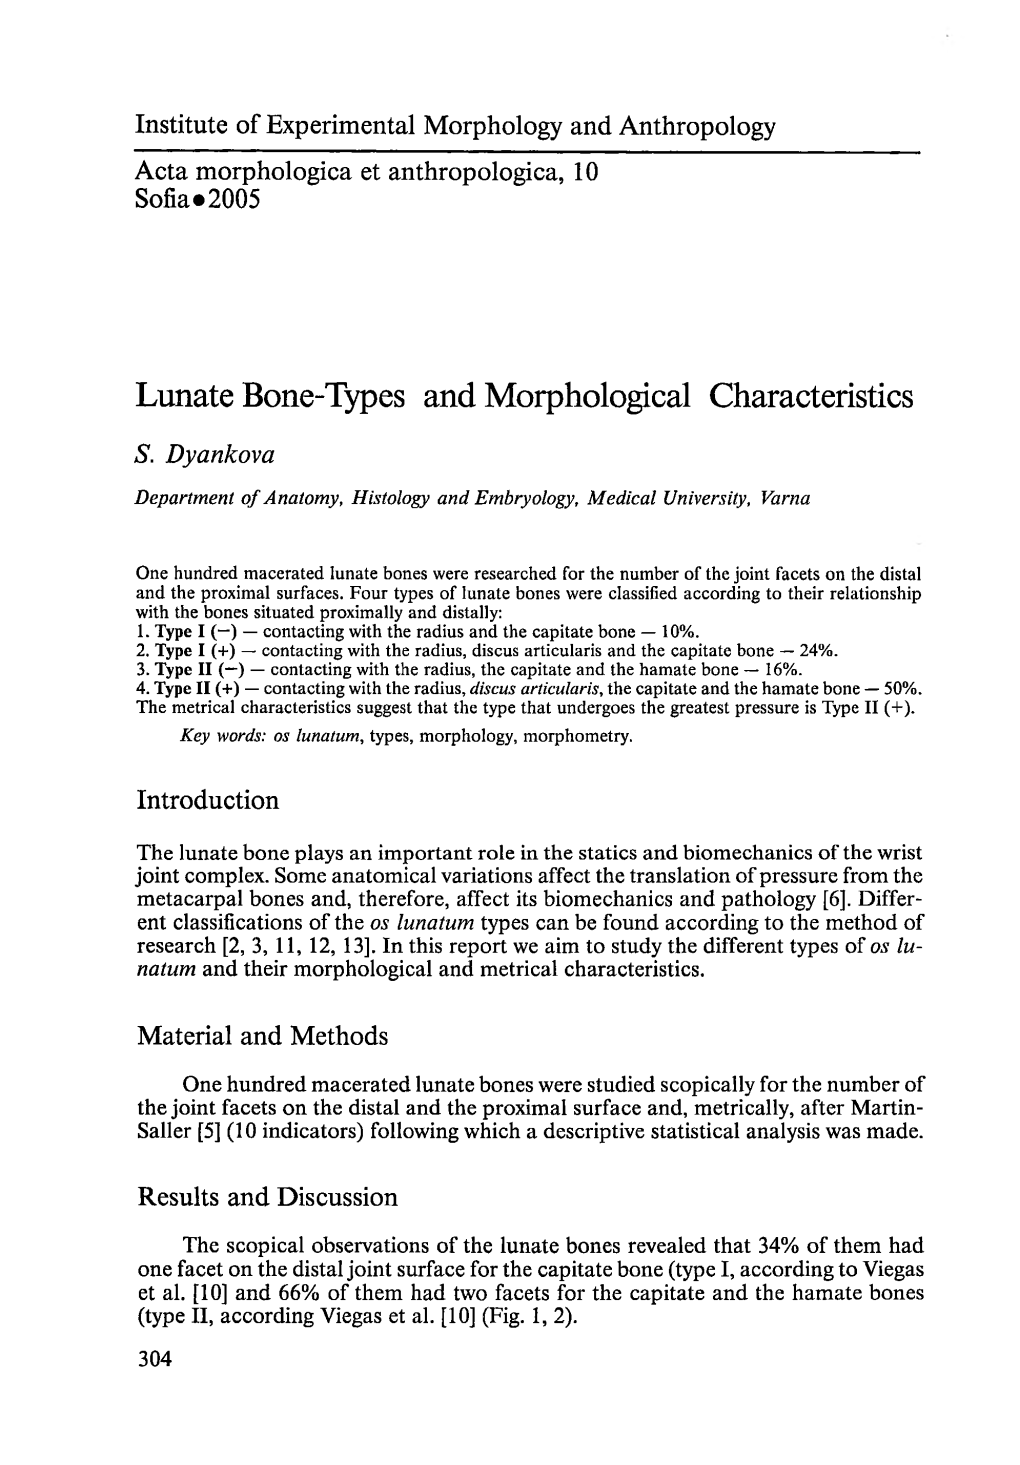 Lunate Bone-Types and Morphological Characteristics